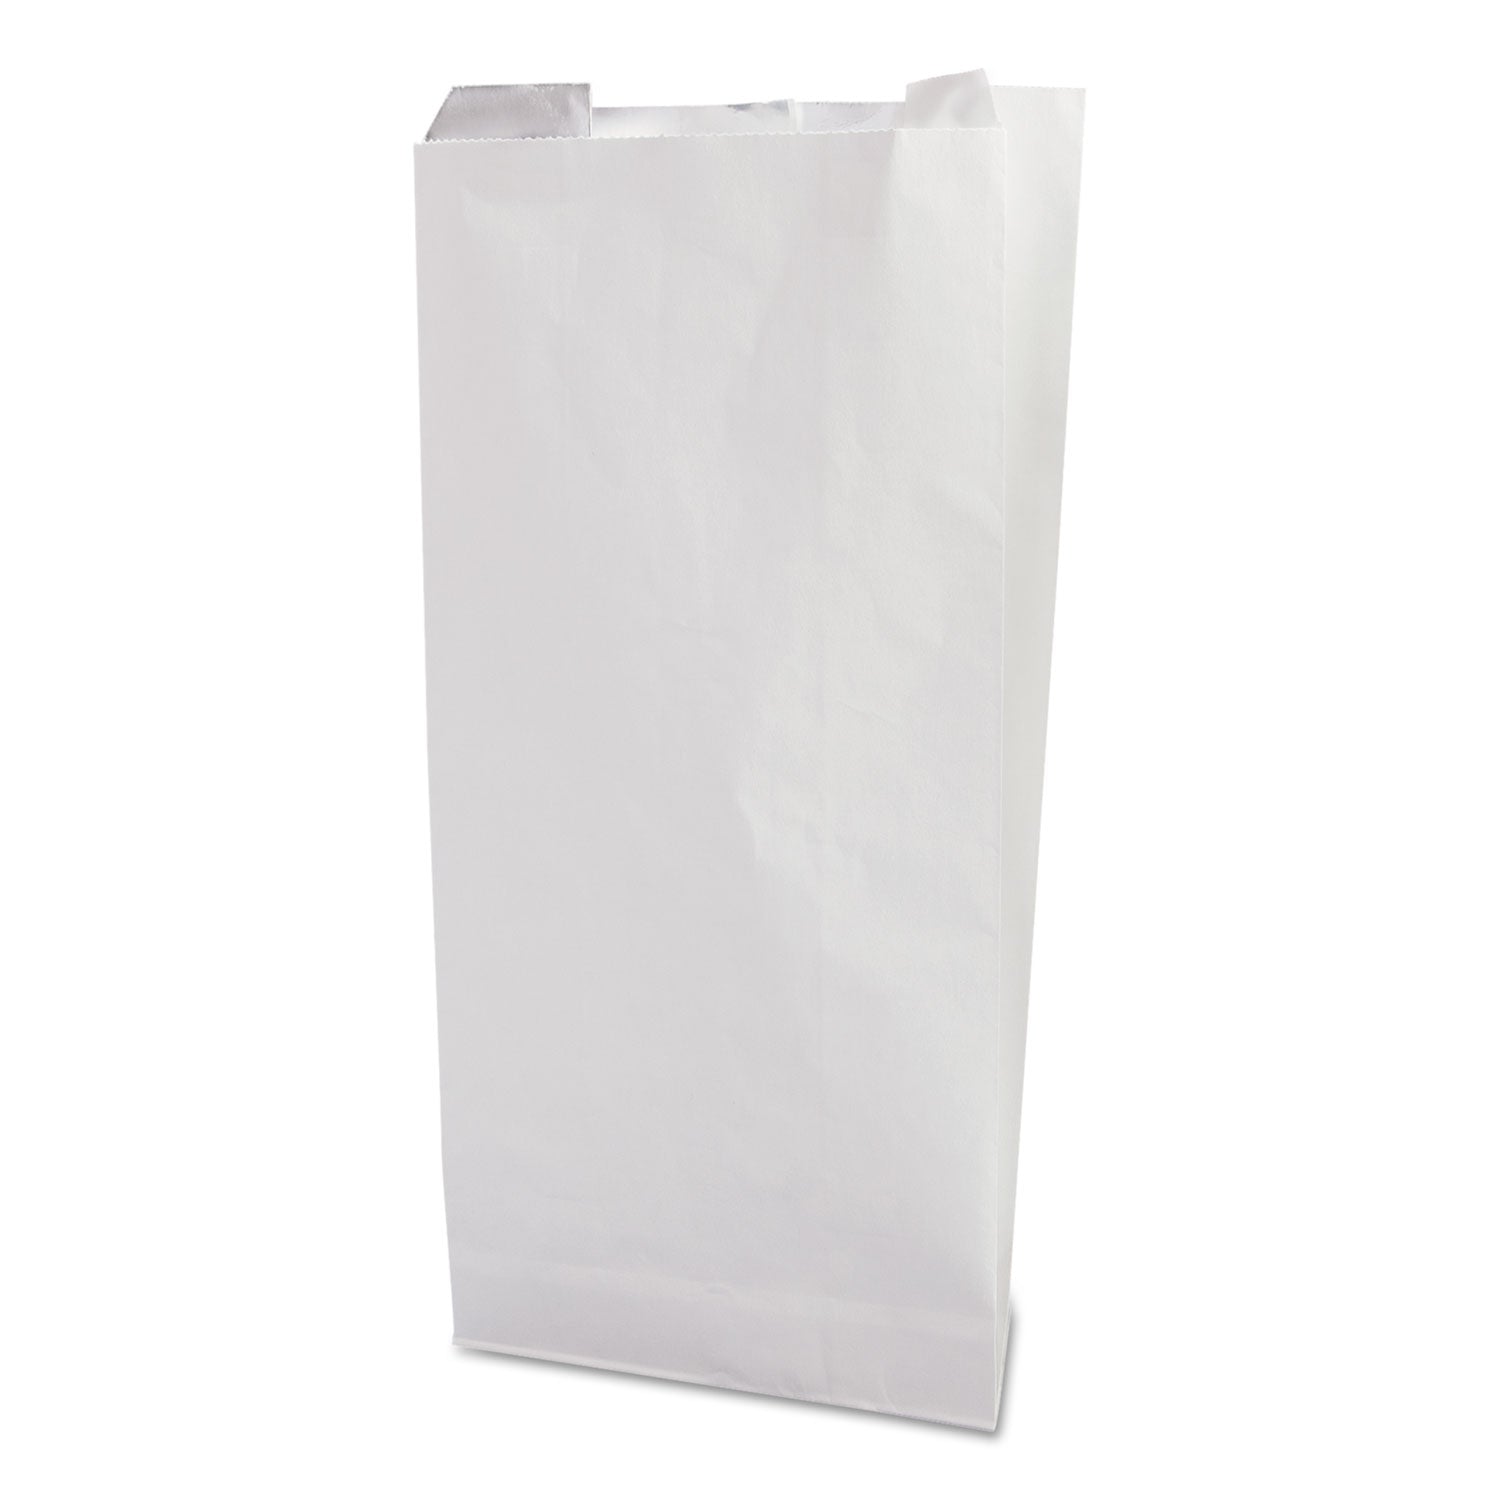 grease-resistant-single-serve-bags-6-x-65-white-2000-carton_bgc300405 - 1